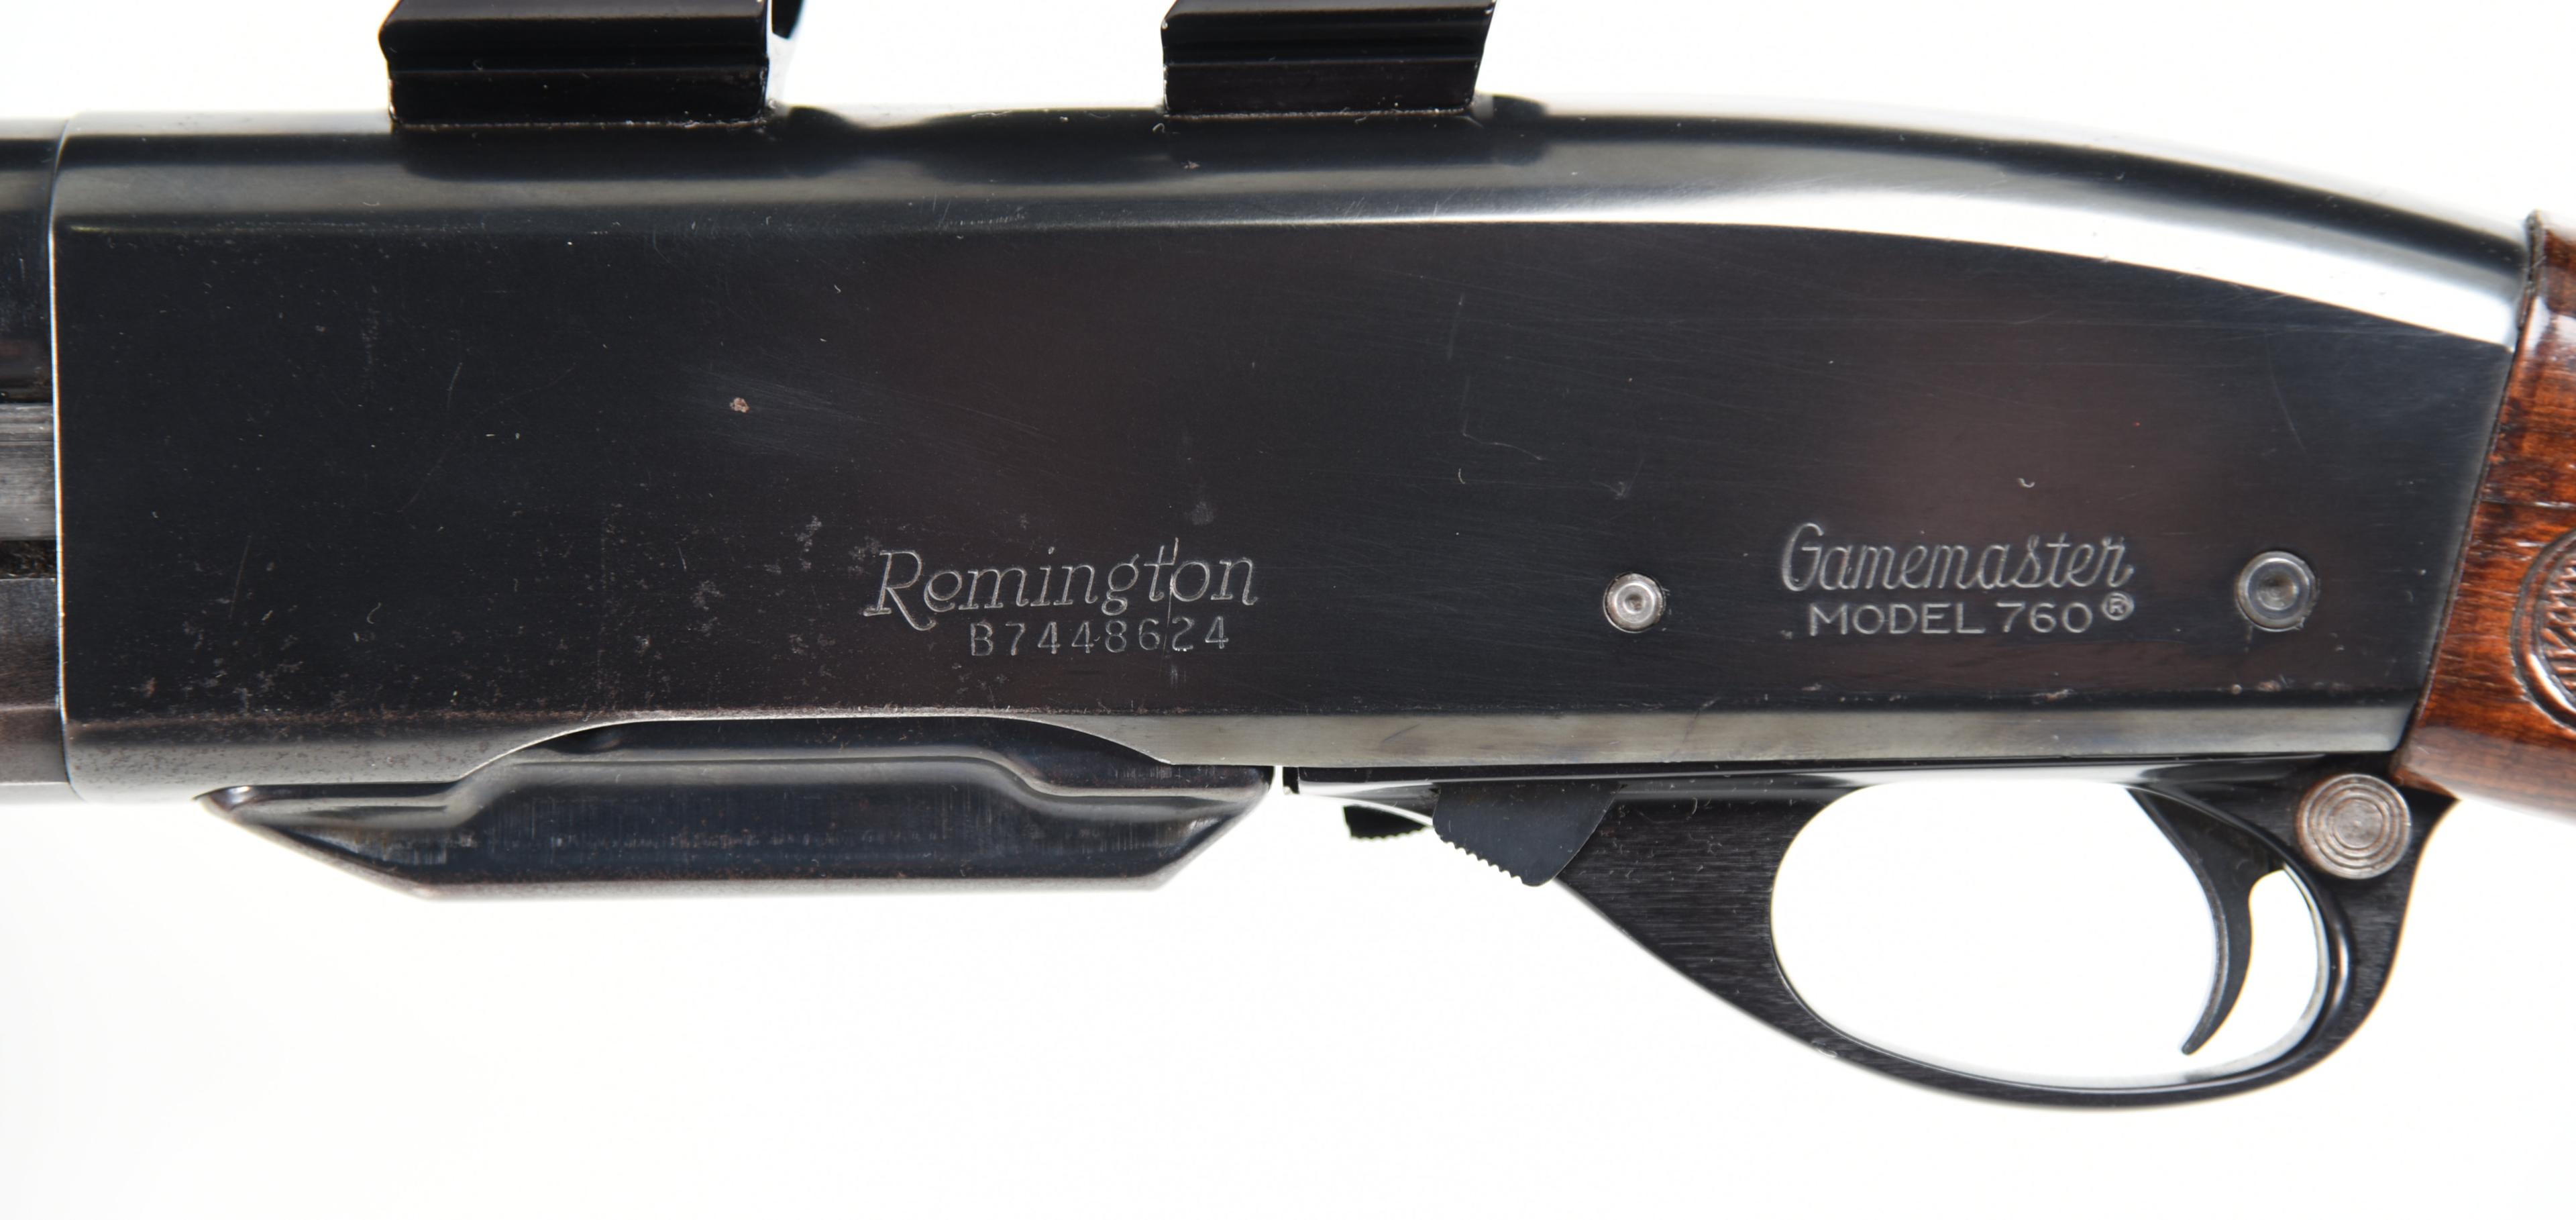 REMINGTON ARMS CO 760 Gamemaster Carbine Pump Action Rifle .30-06